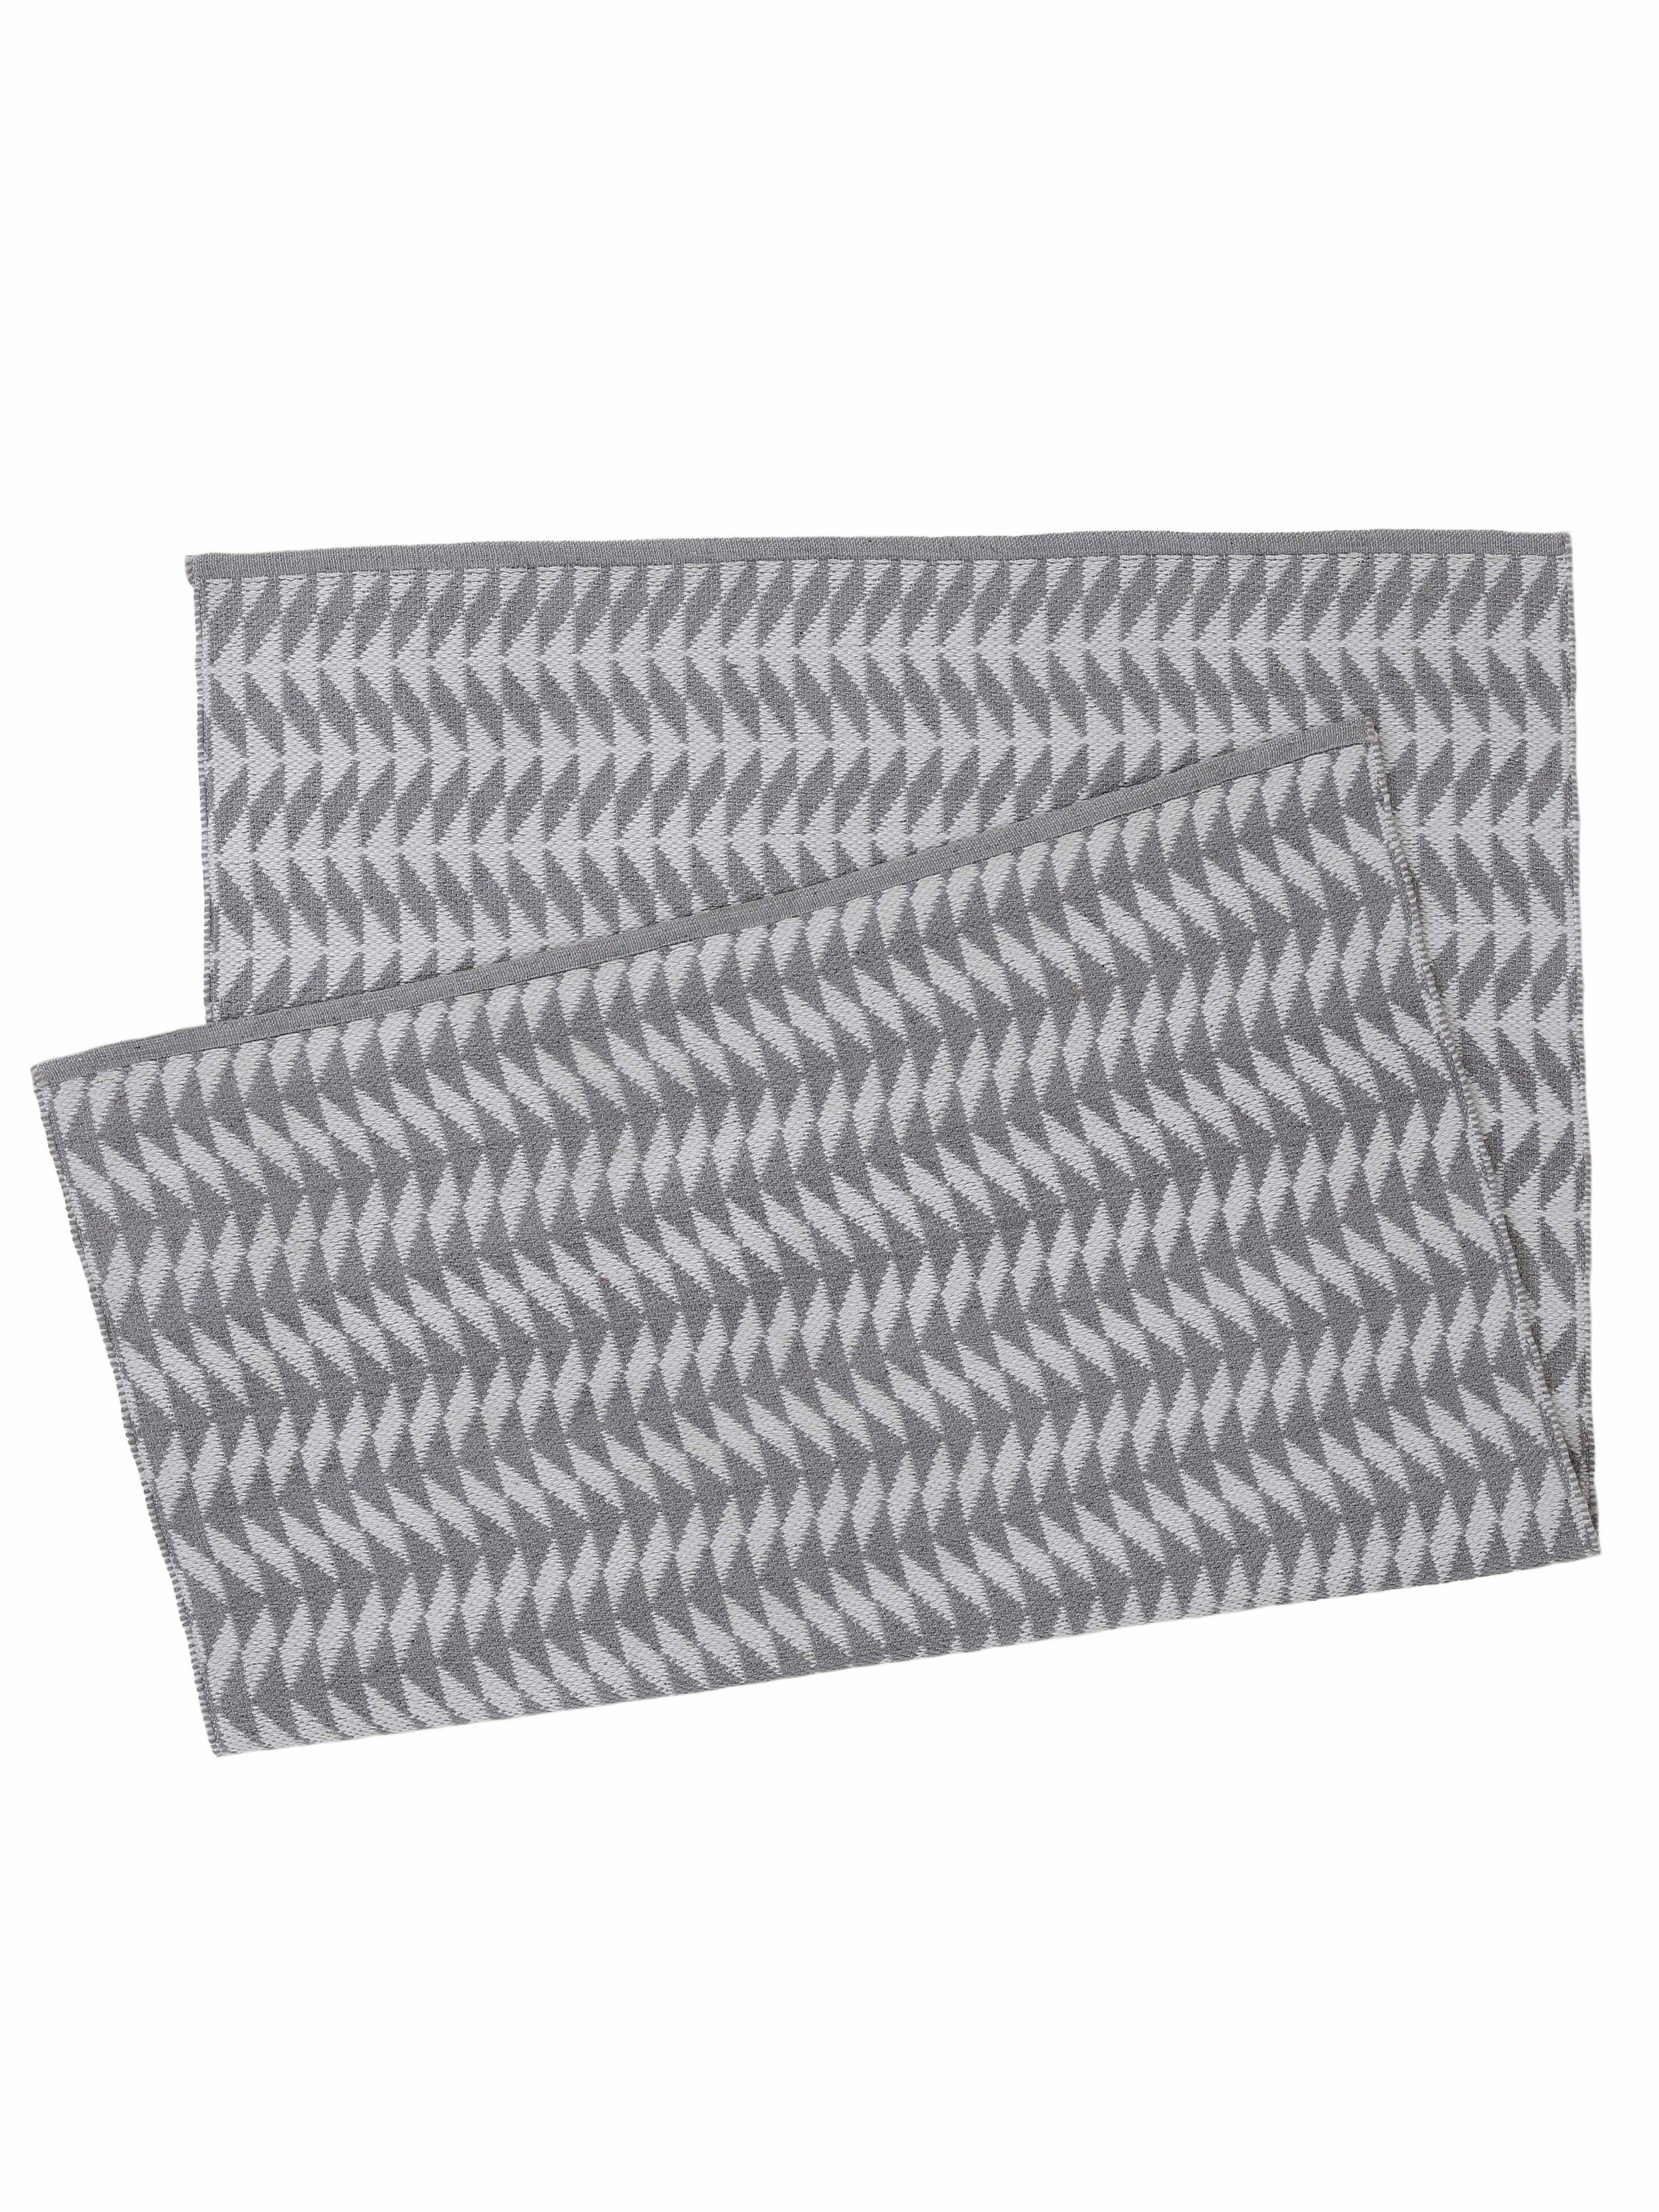 Frida Wendeteppich, rechteckig, Teppich Material Flachgewebe, 7 carpetfine, 100% mm, Höhe: 203, Optik Sisal recyceltem (PET),